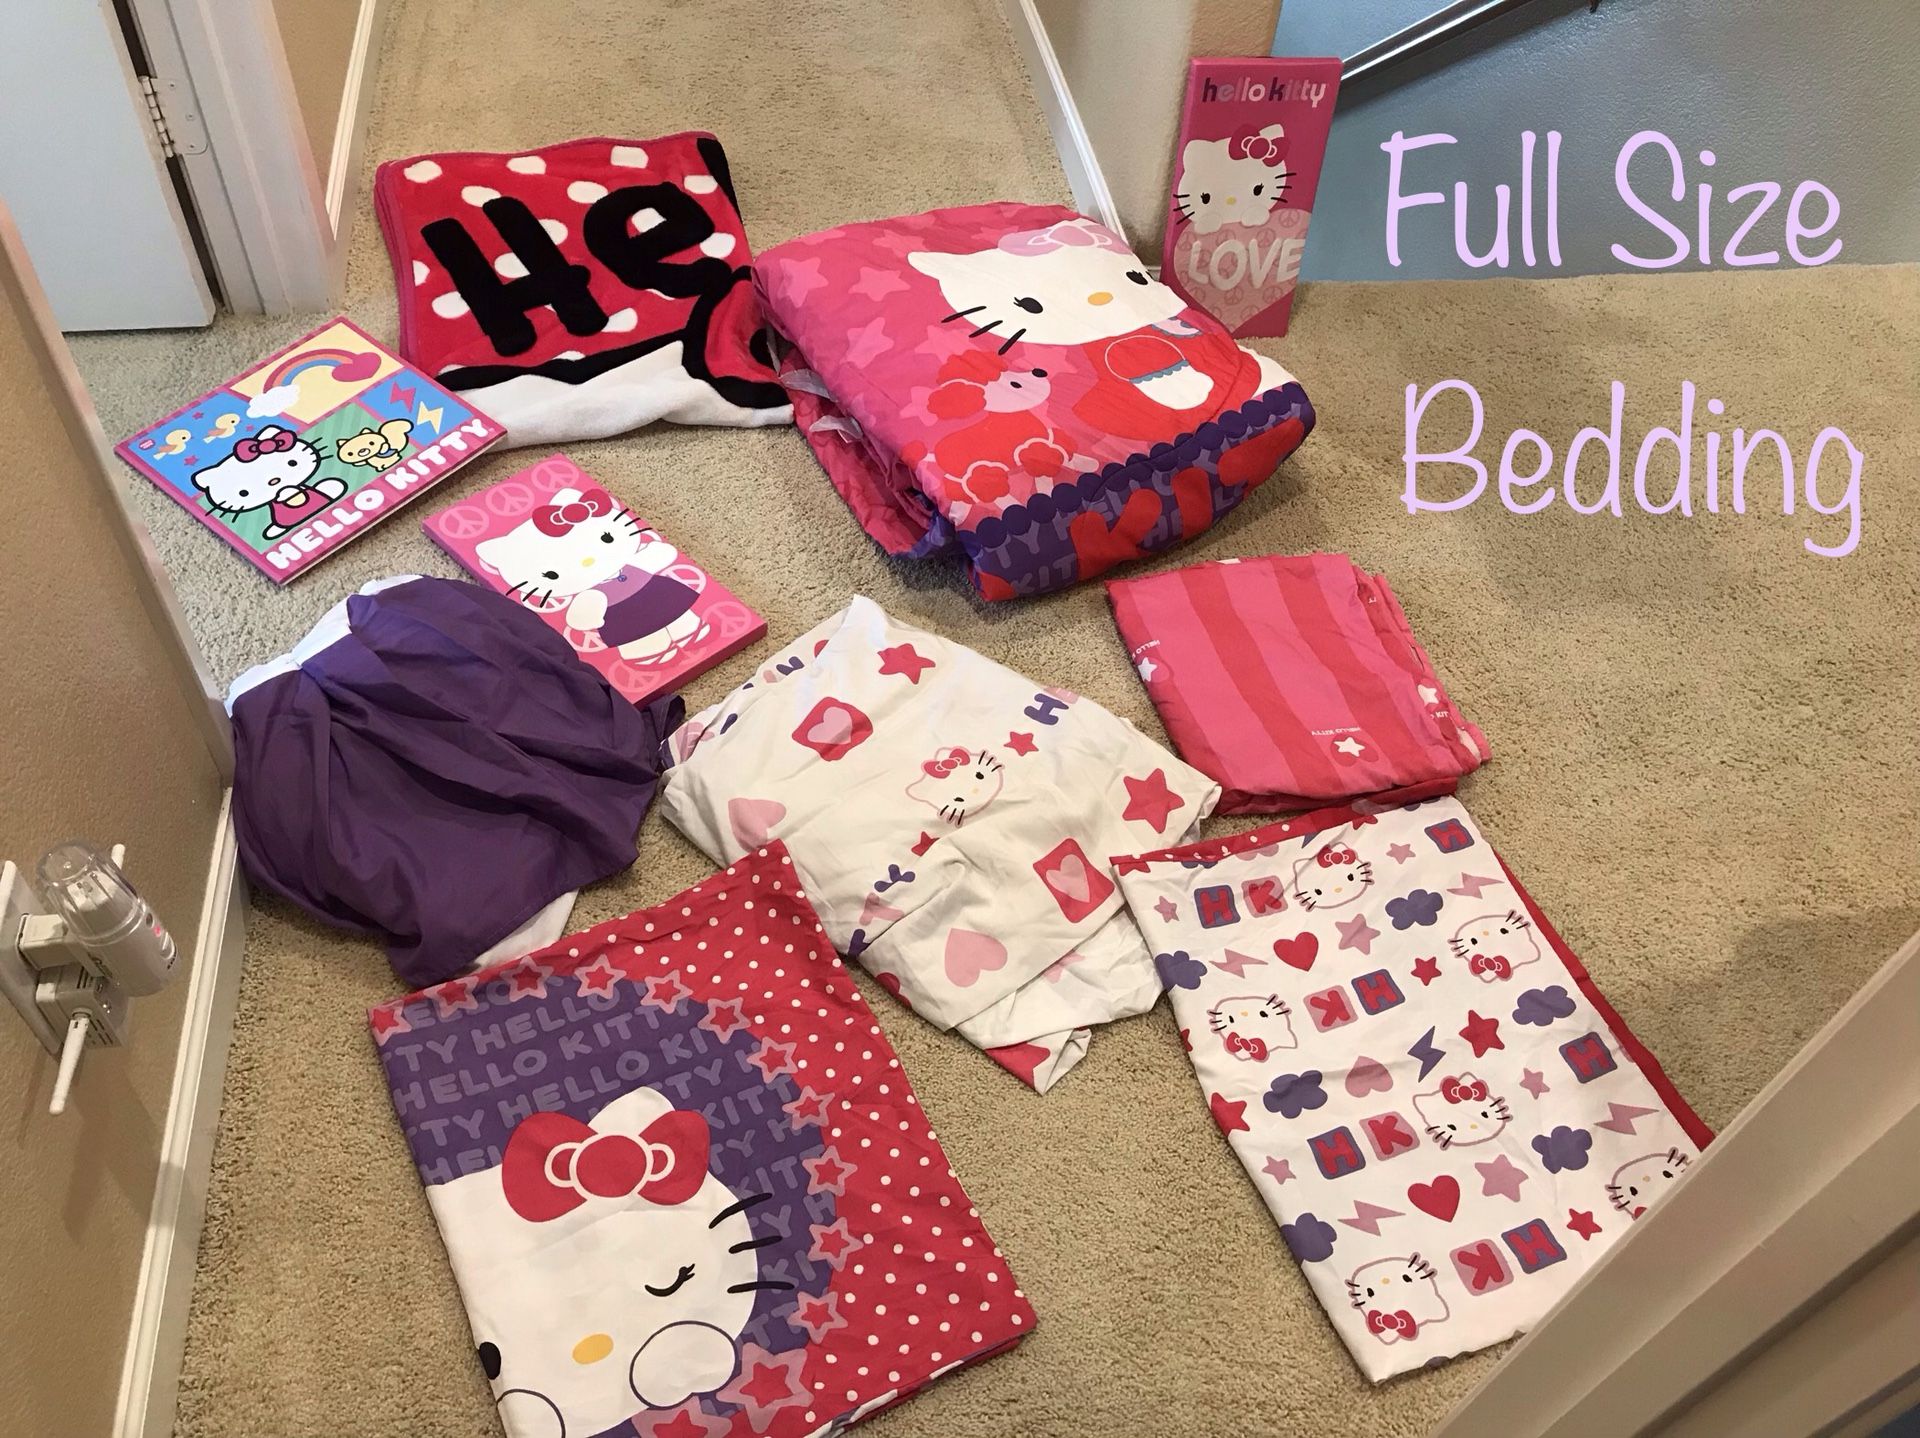 Full Size Hello Kitty Bedding Set